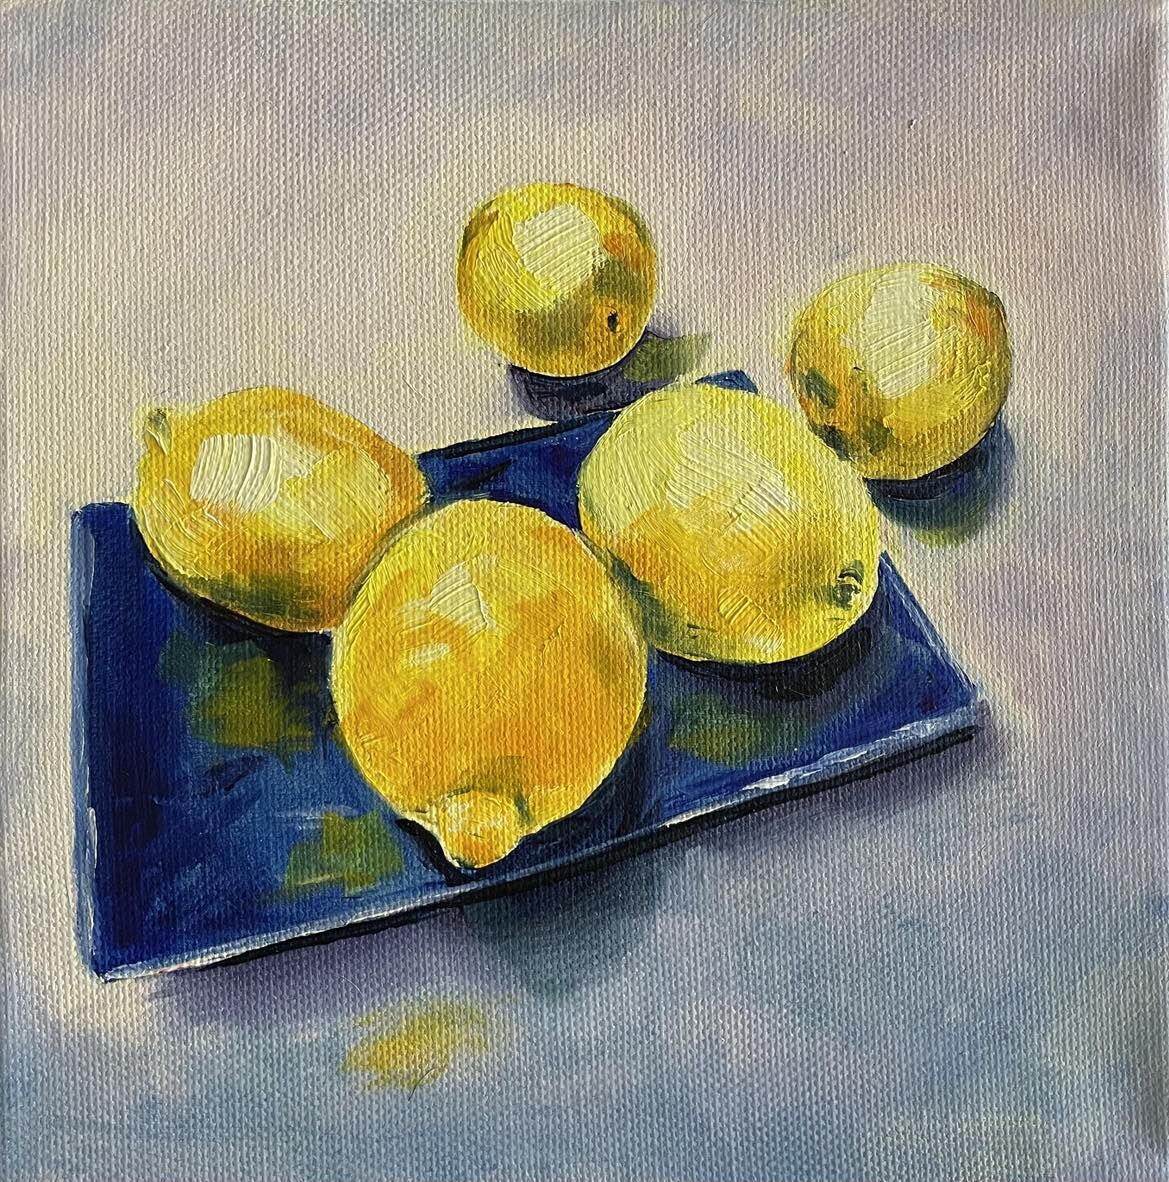 Five Lemons on blue plate